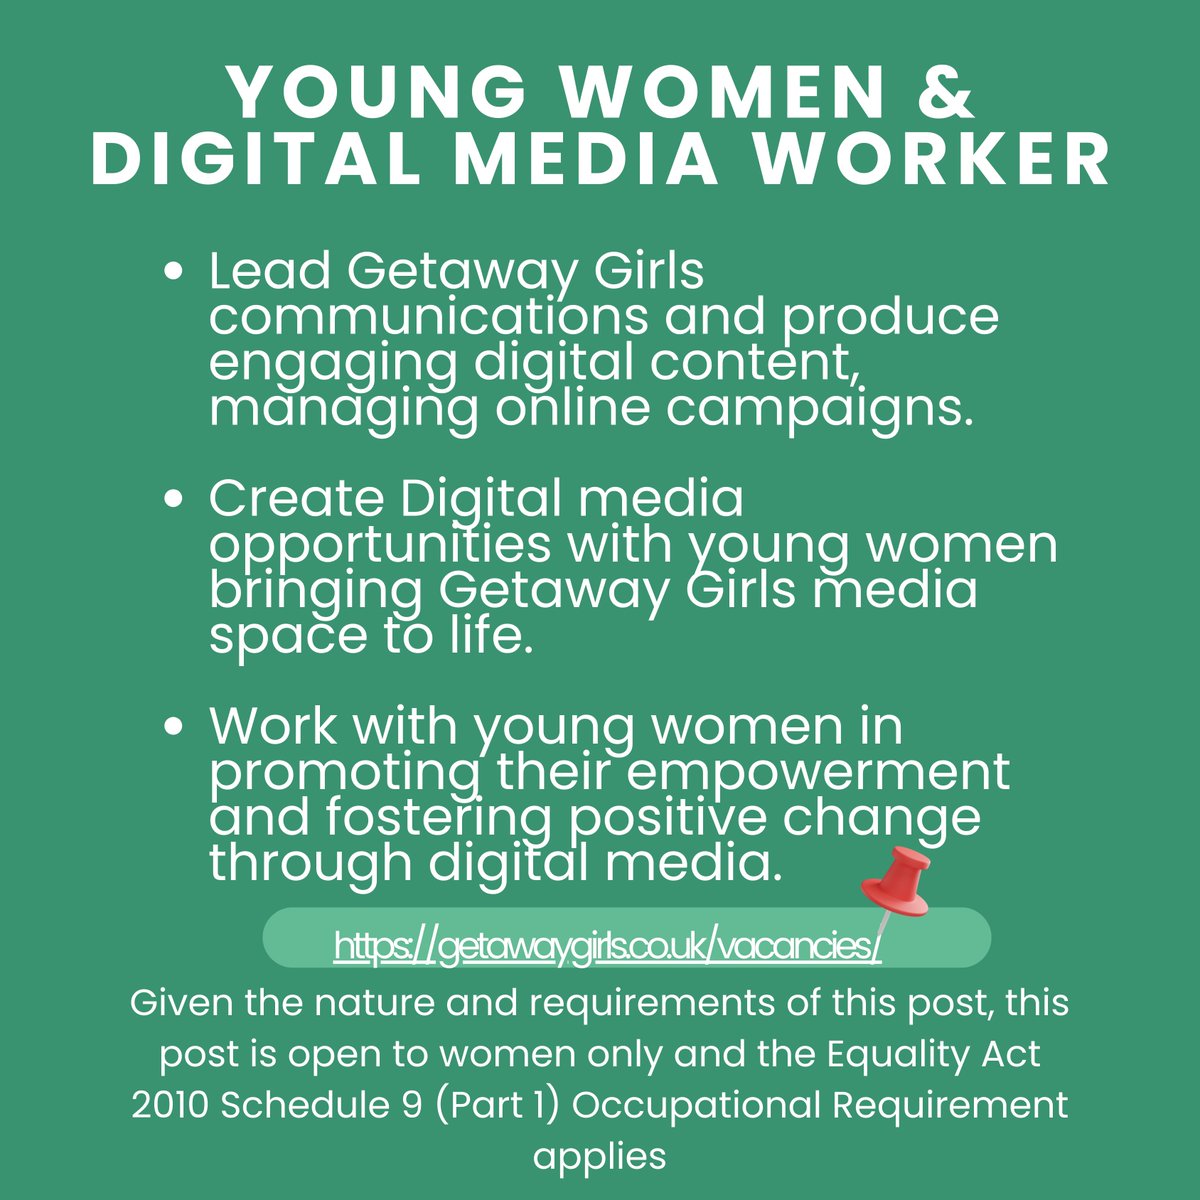 We're hiring! Check out our Young Women and Digital Media Worker post. getawaygirls.co.uk/vacancies/ #GetawayGirls #Career